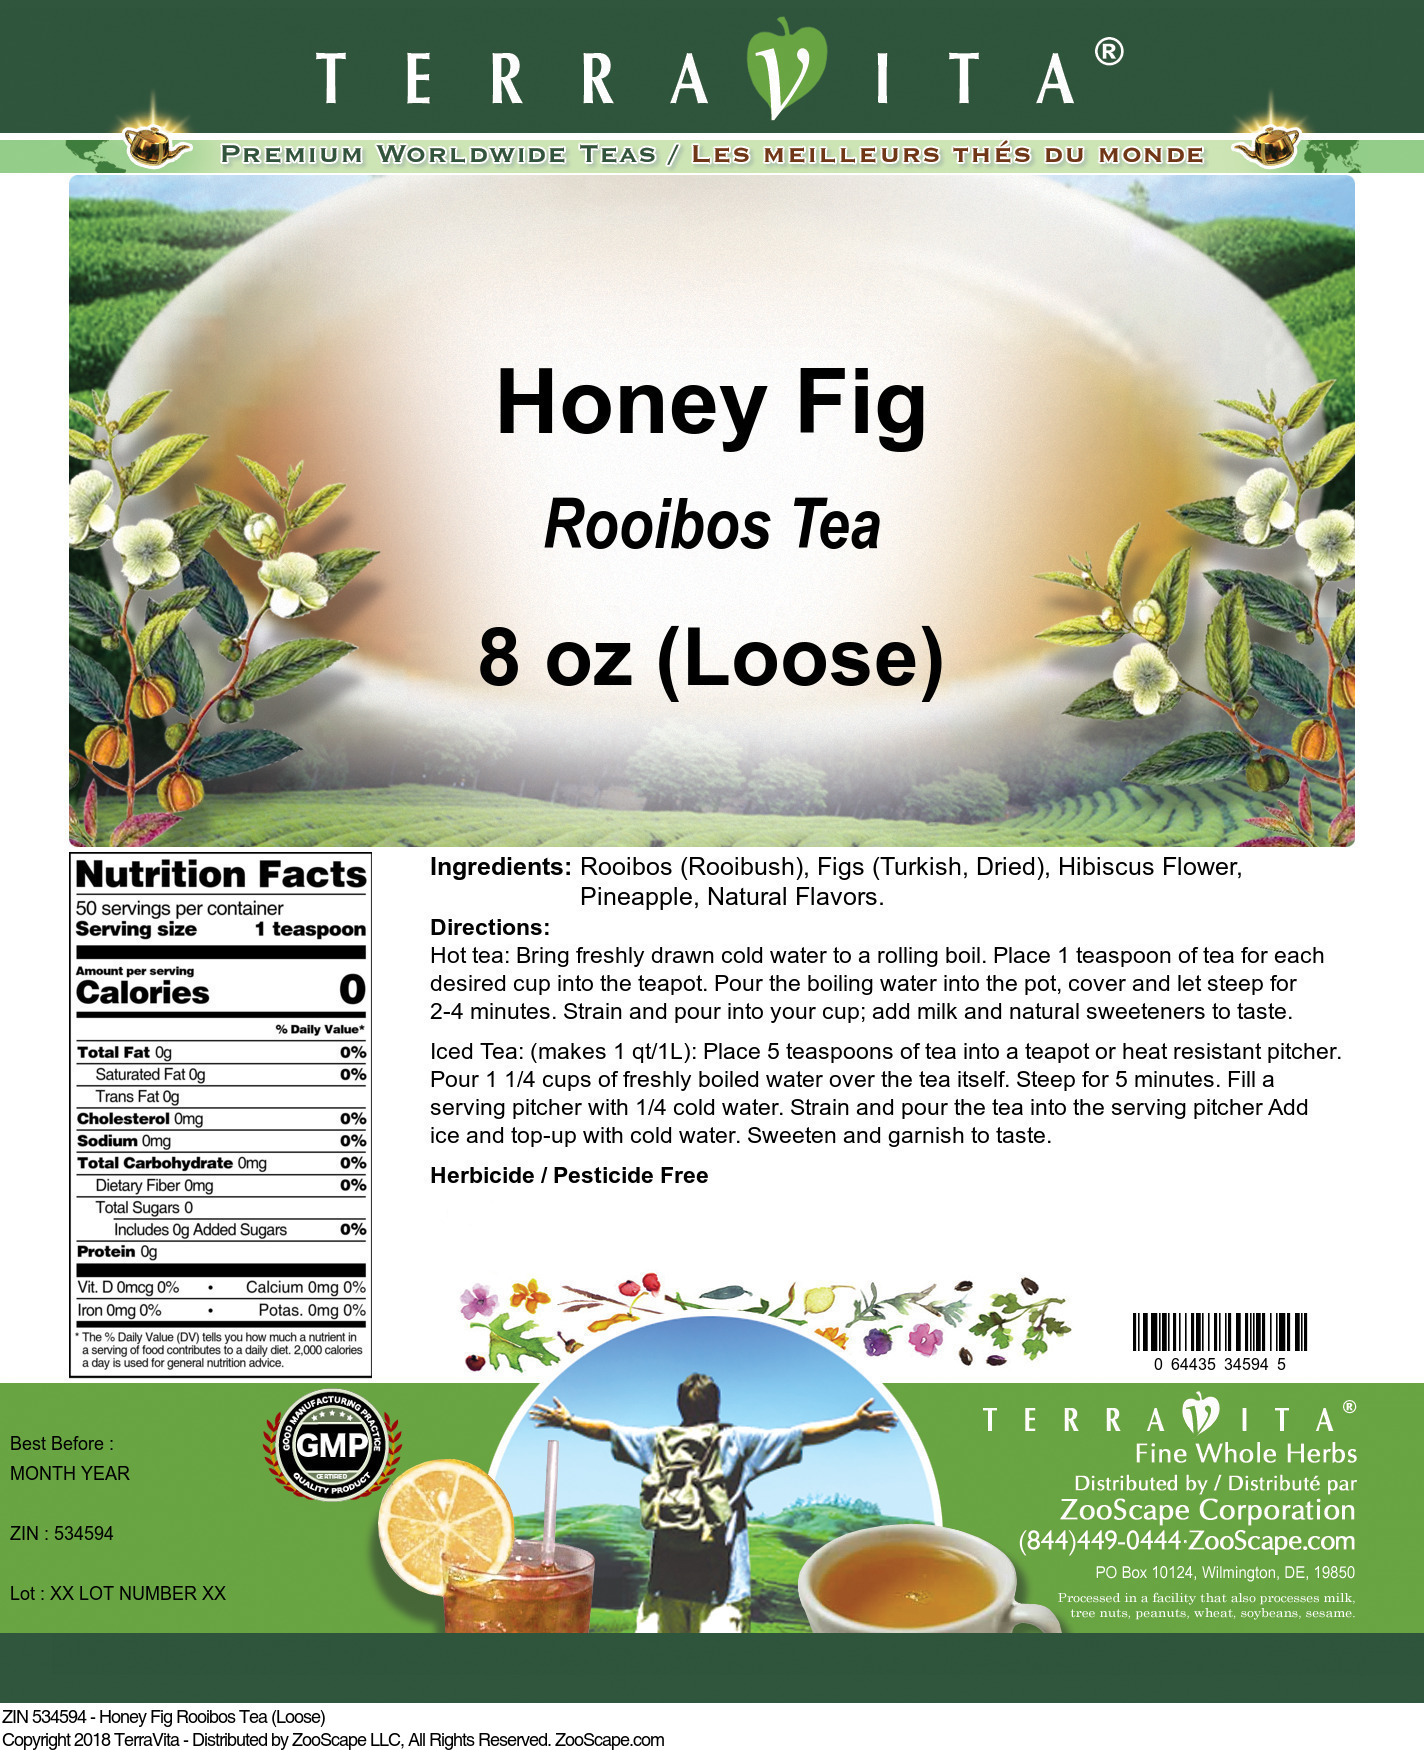 Honey Fig Rooibos Tea (Loose) - Label